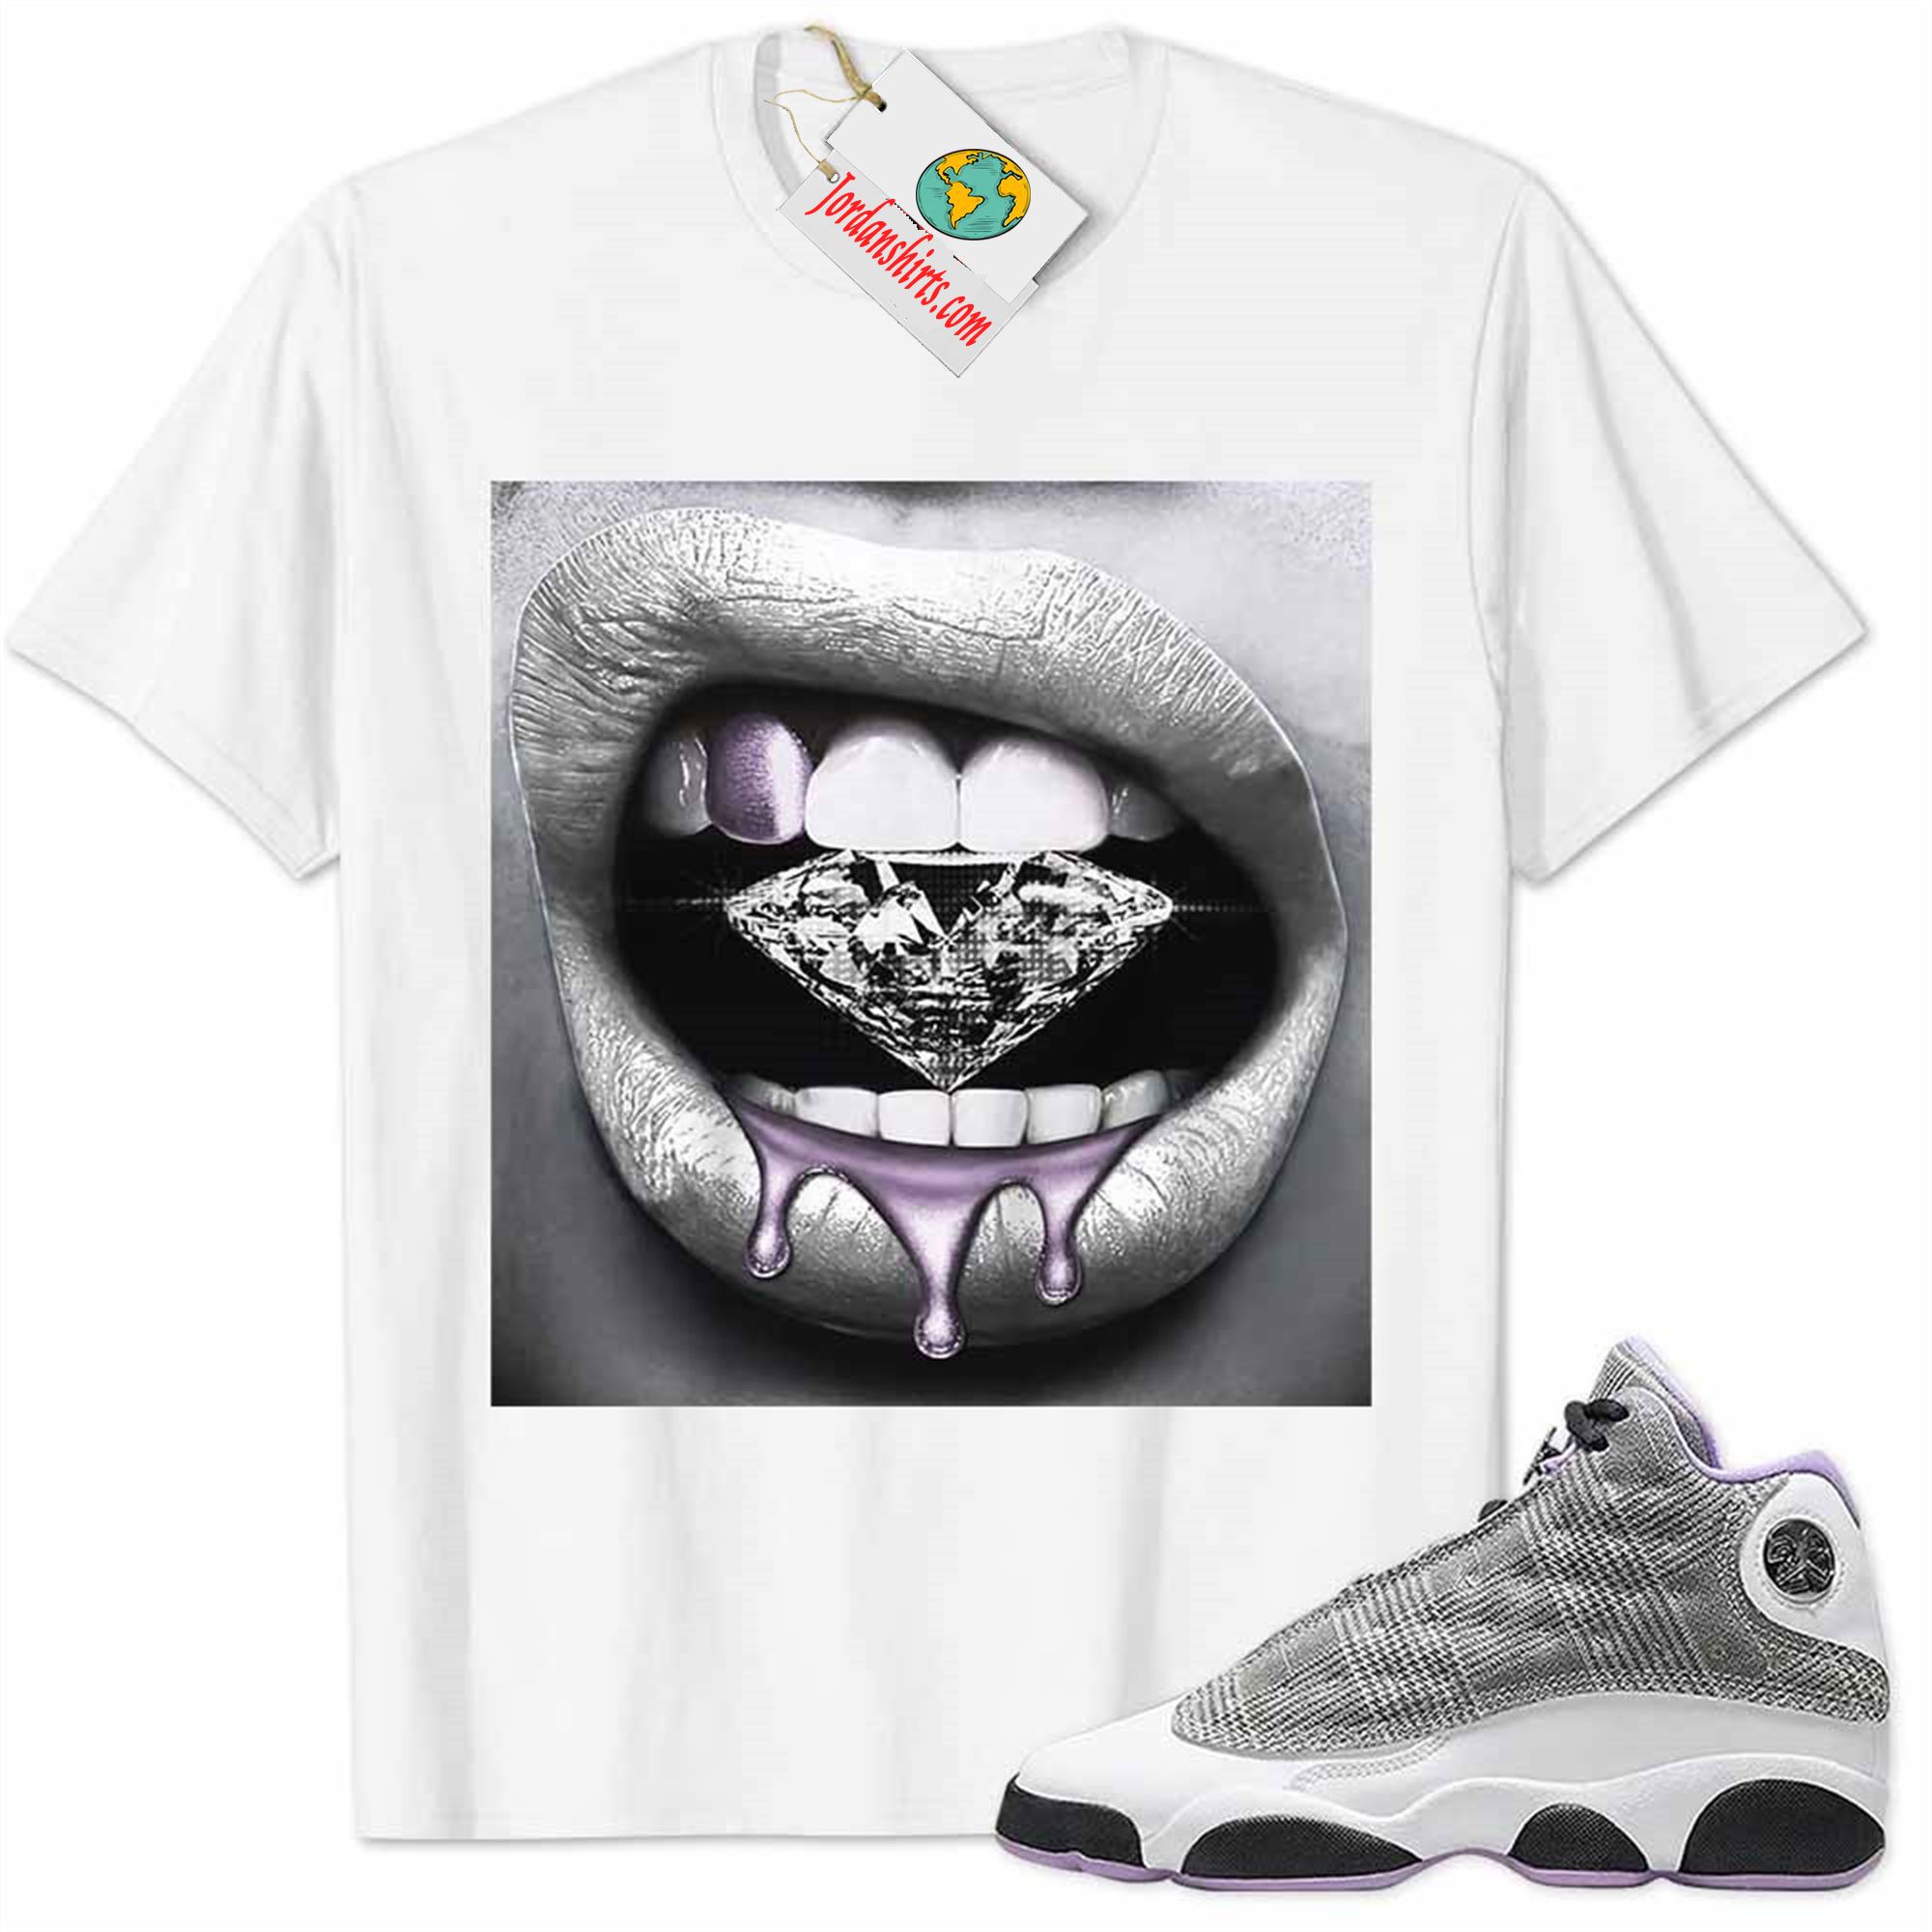 Jordan 13 Shirt, Jordan 13 Houndstooth Shirt Sexy Lip Bite Diamond Dripping White Plus Size Up To 5xl